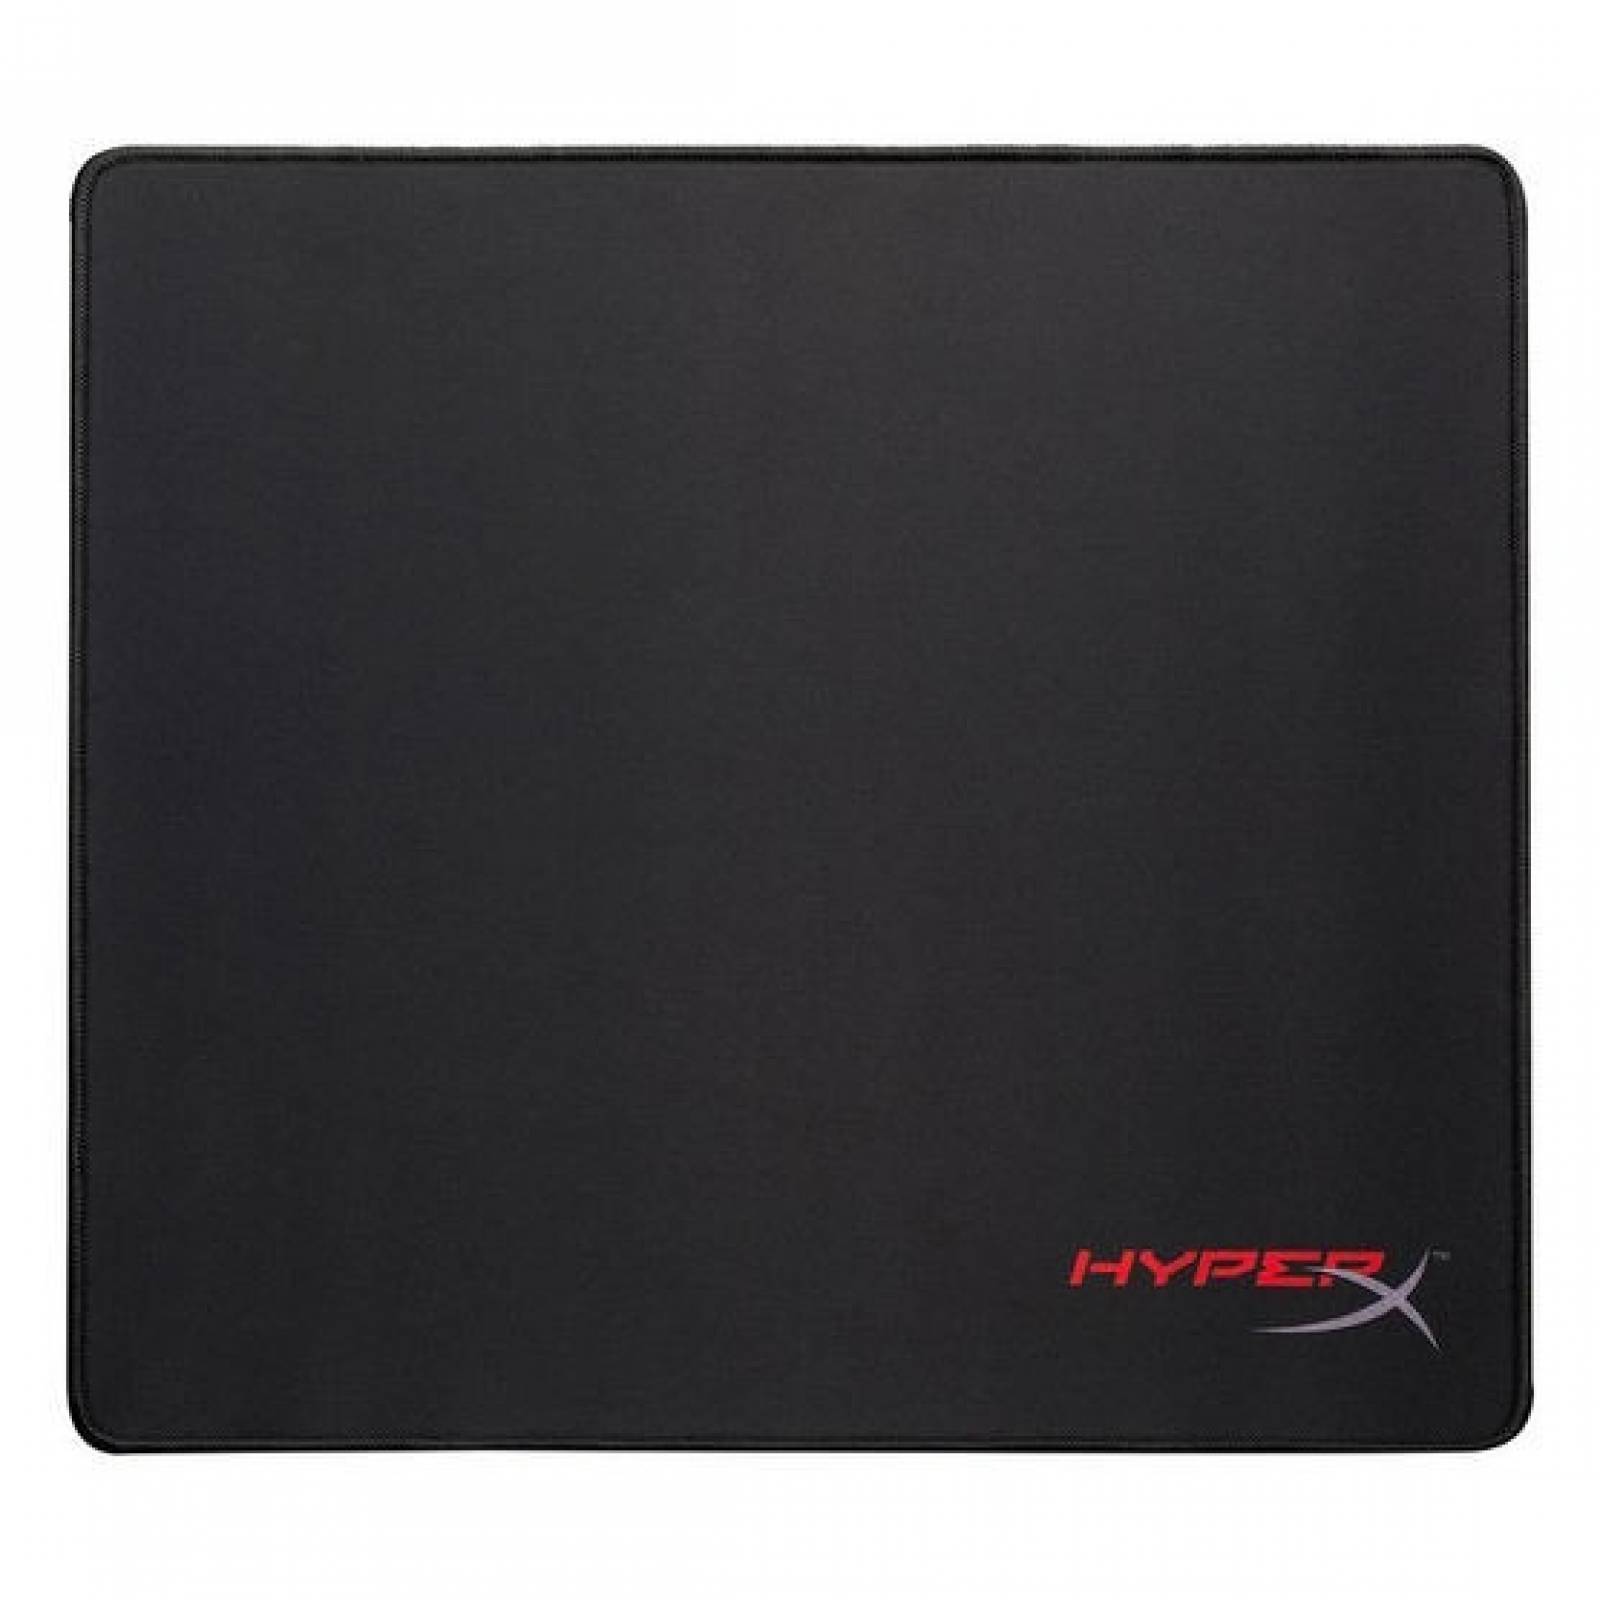 Mouse pad Gamer Hyperx Fury S Pro XL HX-MPFS-XL Kingston